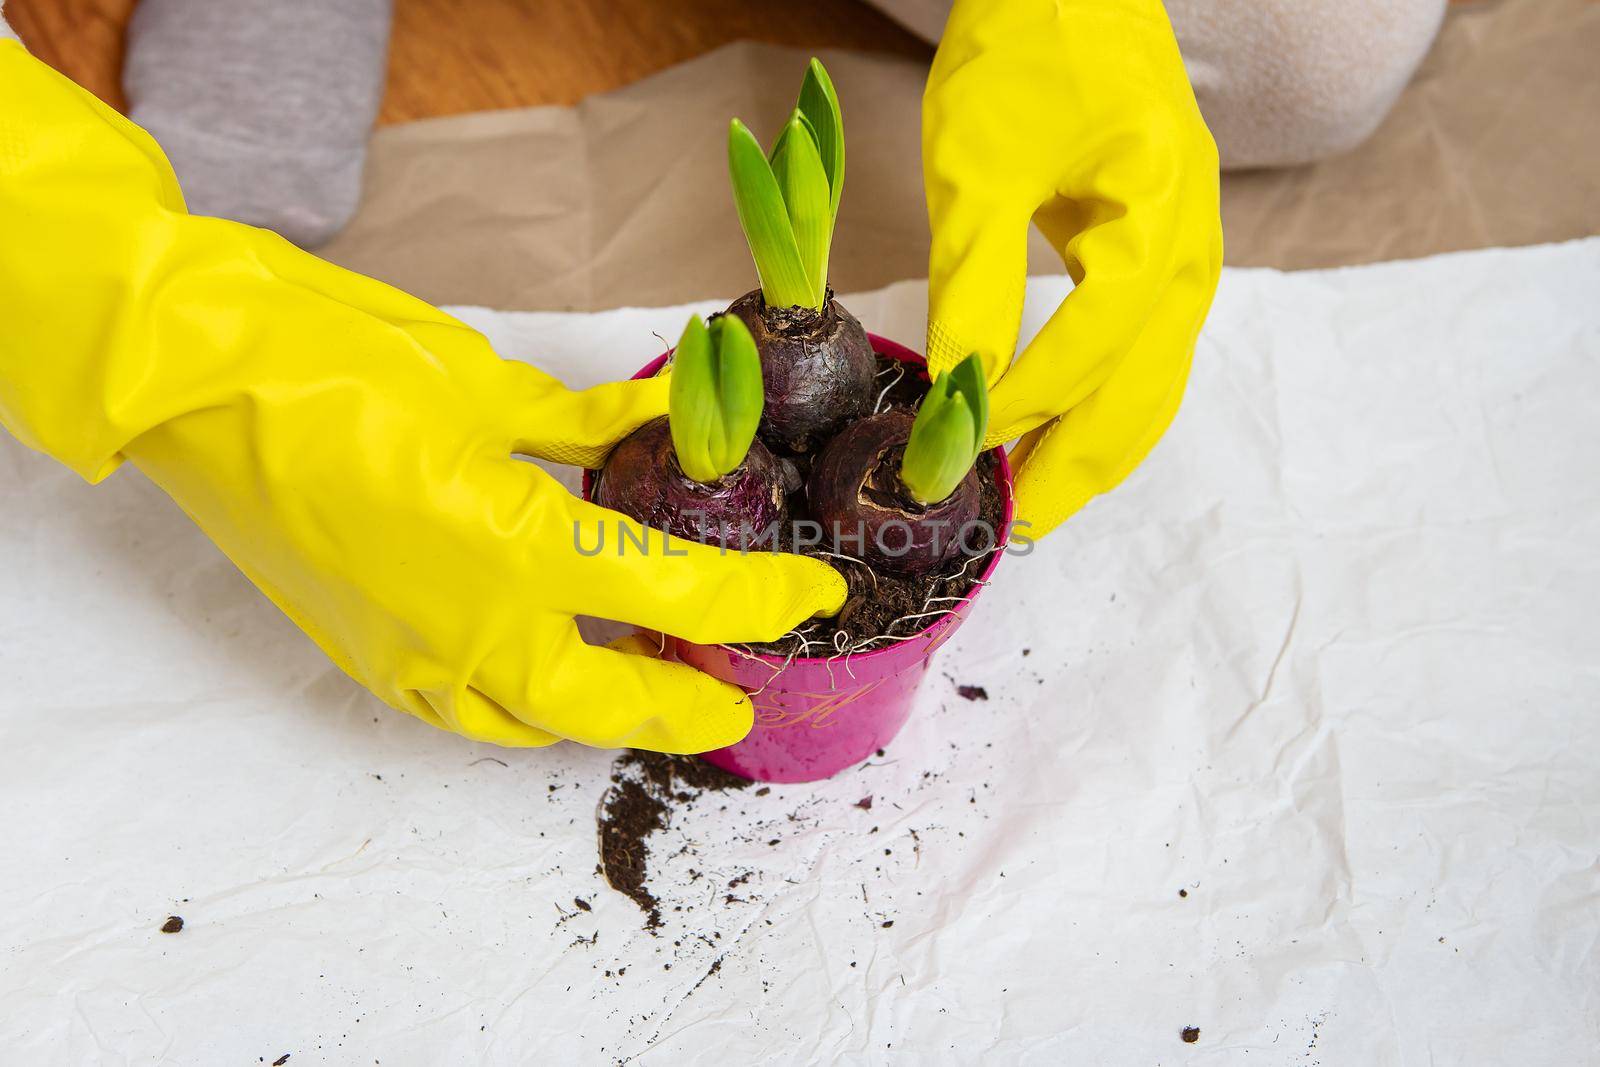 Transplanting hyacinths from a pot, planting hyacinth bulbs, gardening equipment for transplanting, gloves, scissors